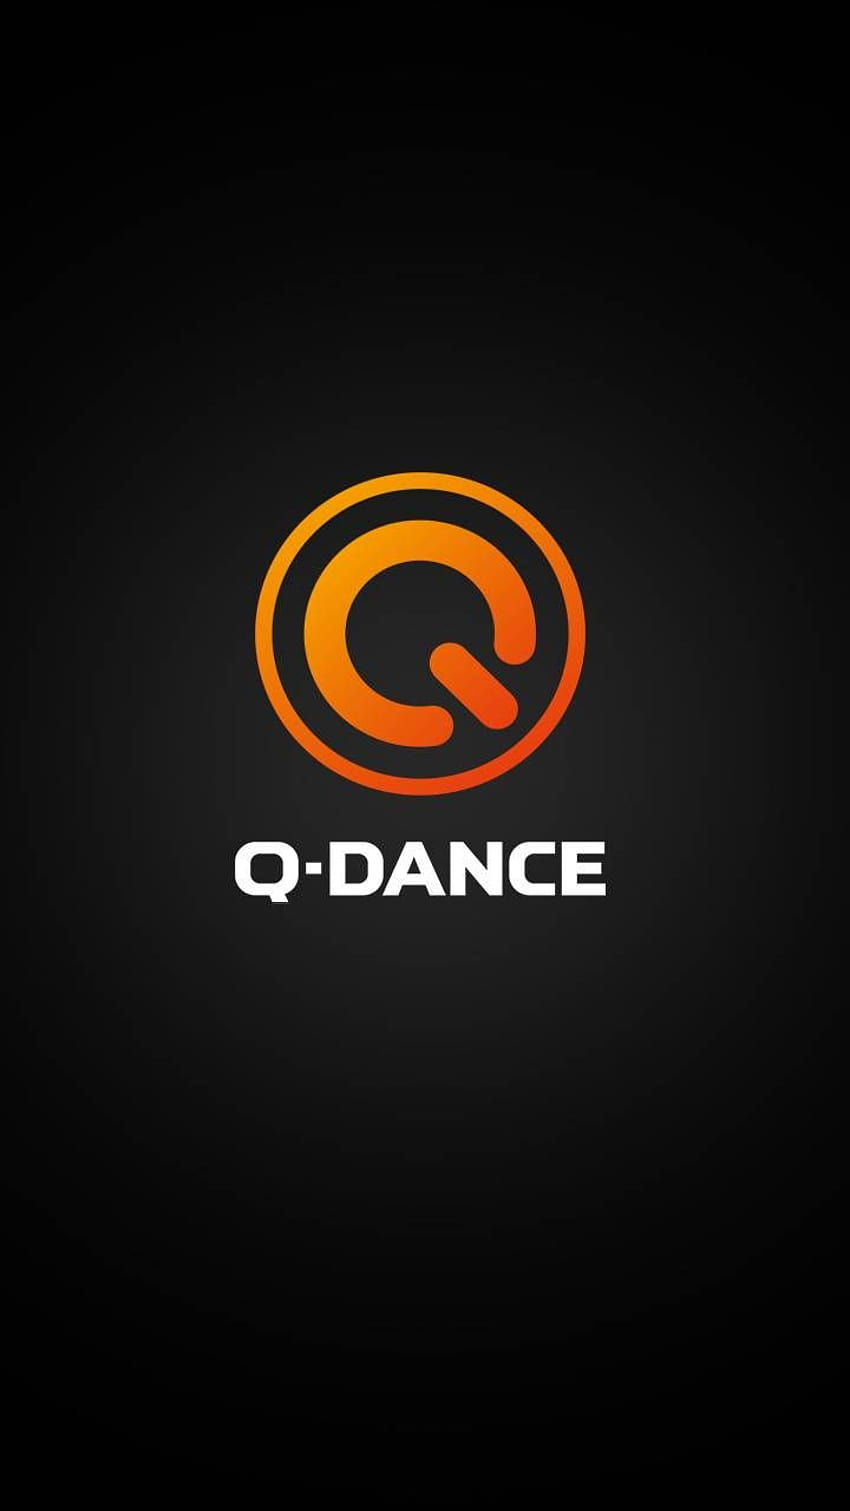 Q, dance logo HD phone wallpaper